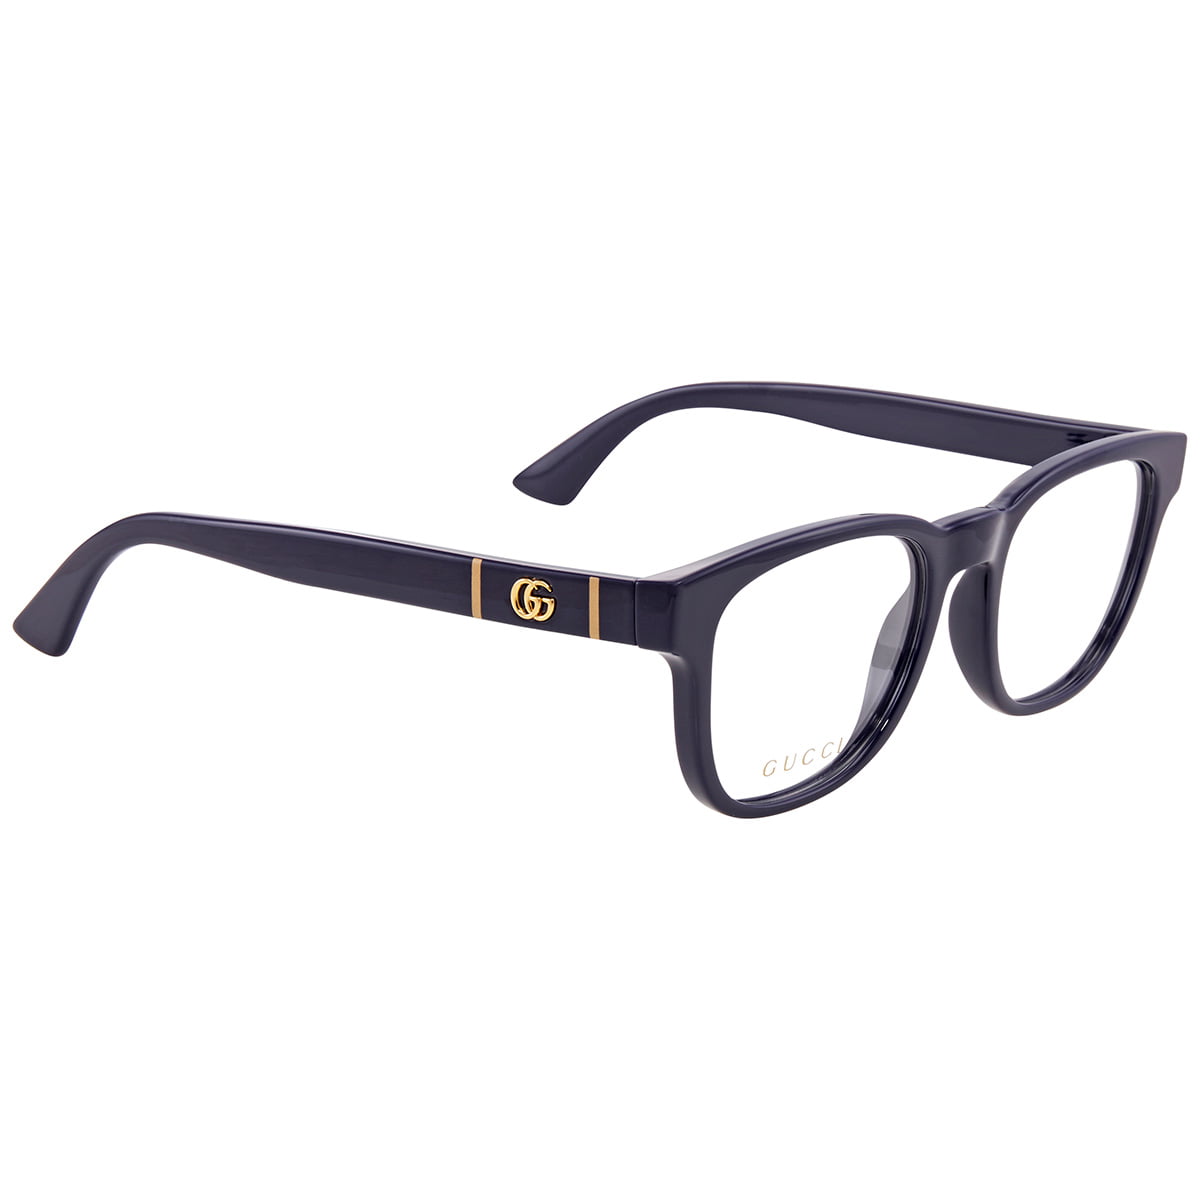 Ladies Blue Oval Eyeglass Frames 3 51 - Walmart.com